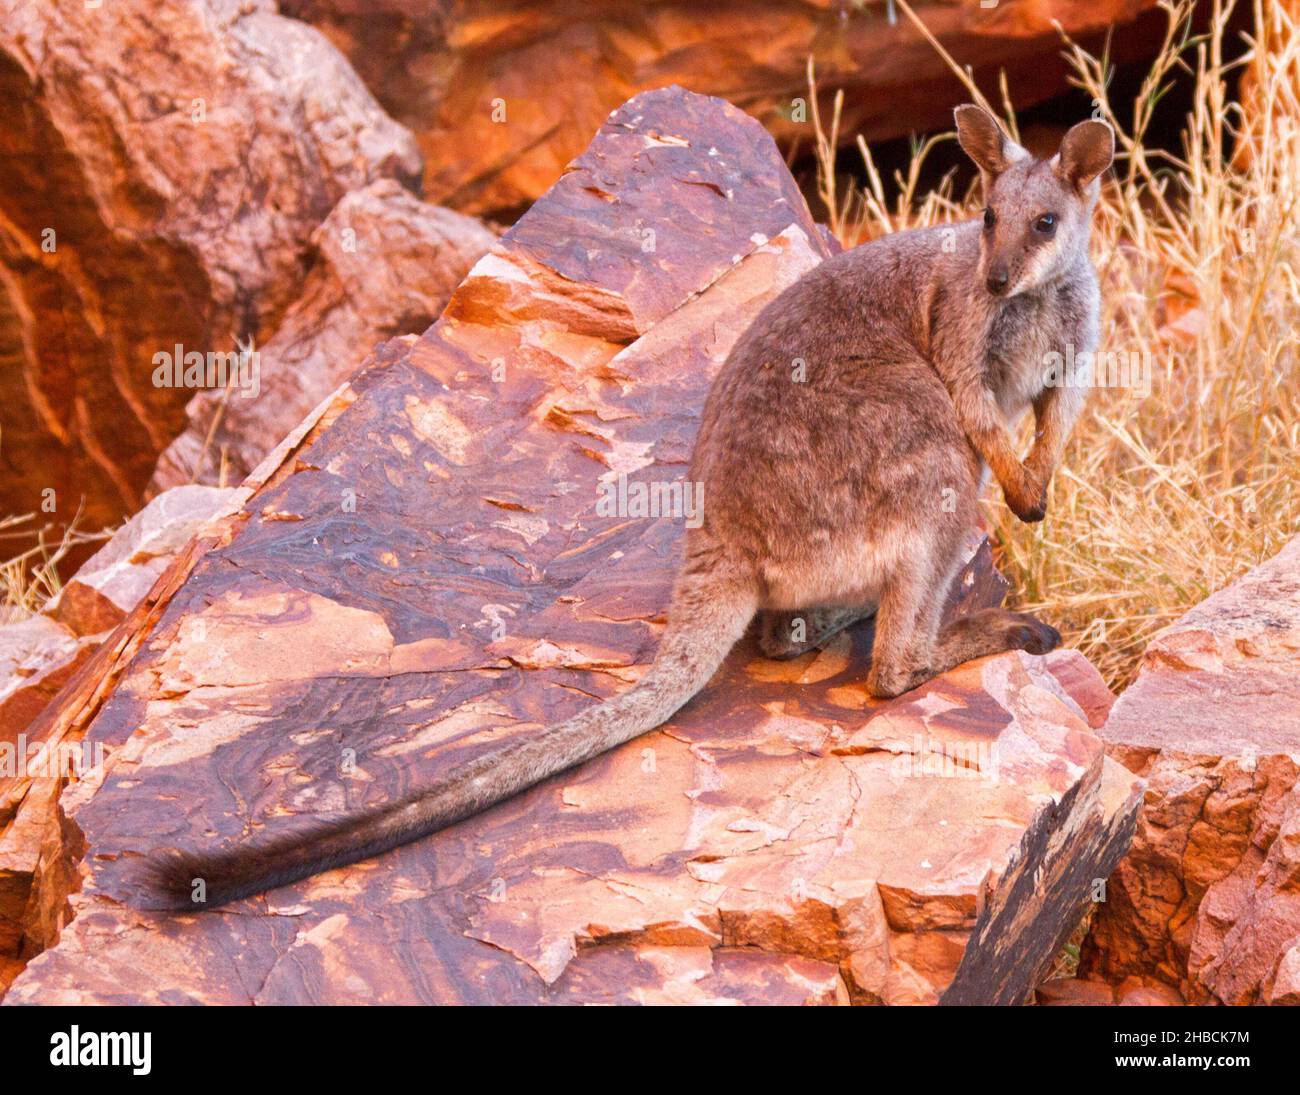 Black-footed Rock Wallaby, Petrogale lateralis centralis, seltene und bedrohte Arten bei Simpson's Gap in den West MacDonnell Ranges in der Nähe von Alice Springs NT Stockfoto